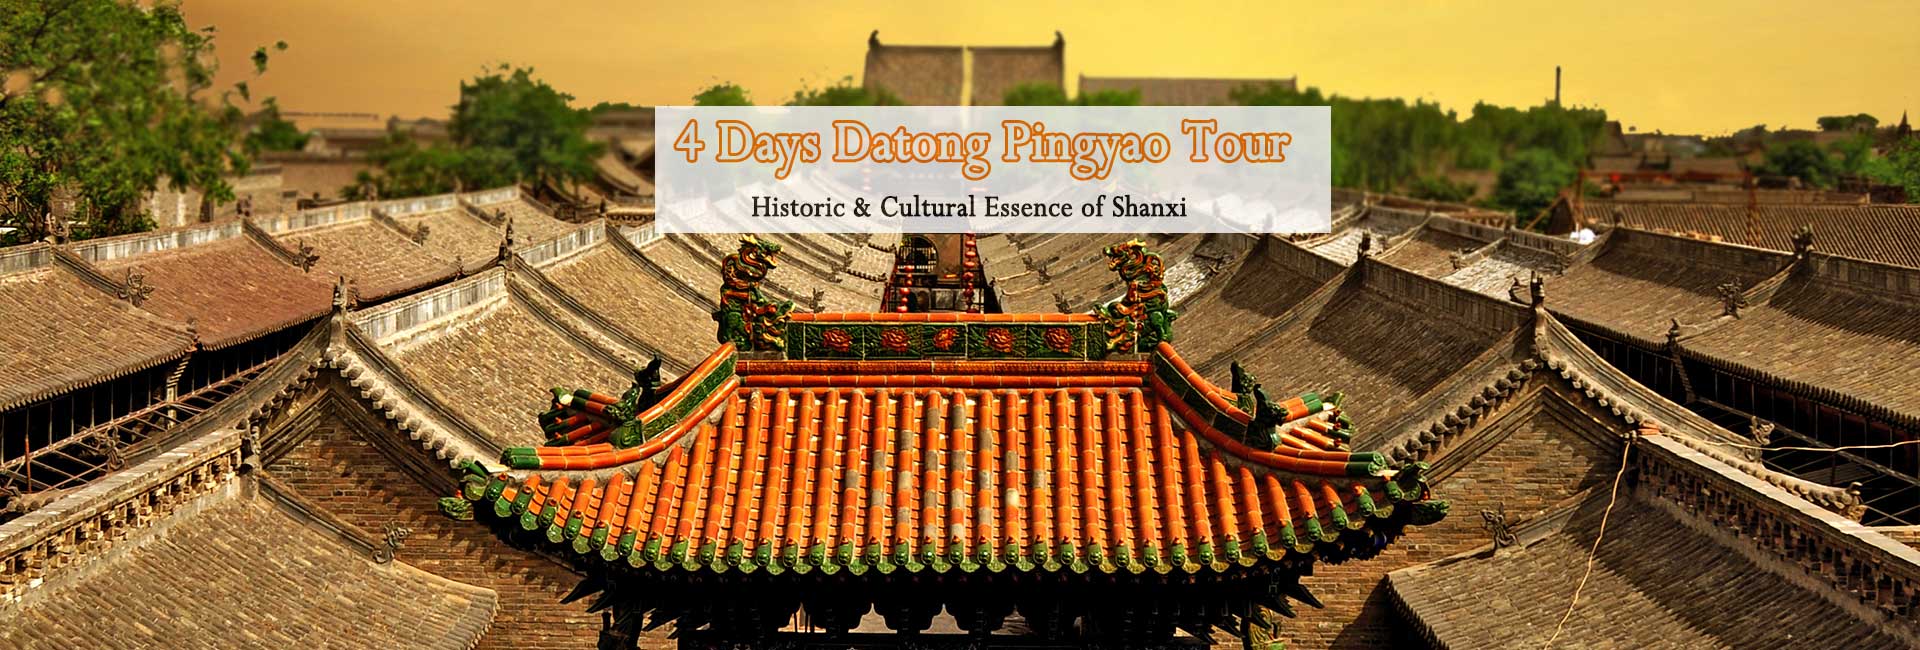 Shanxi Tours 